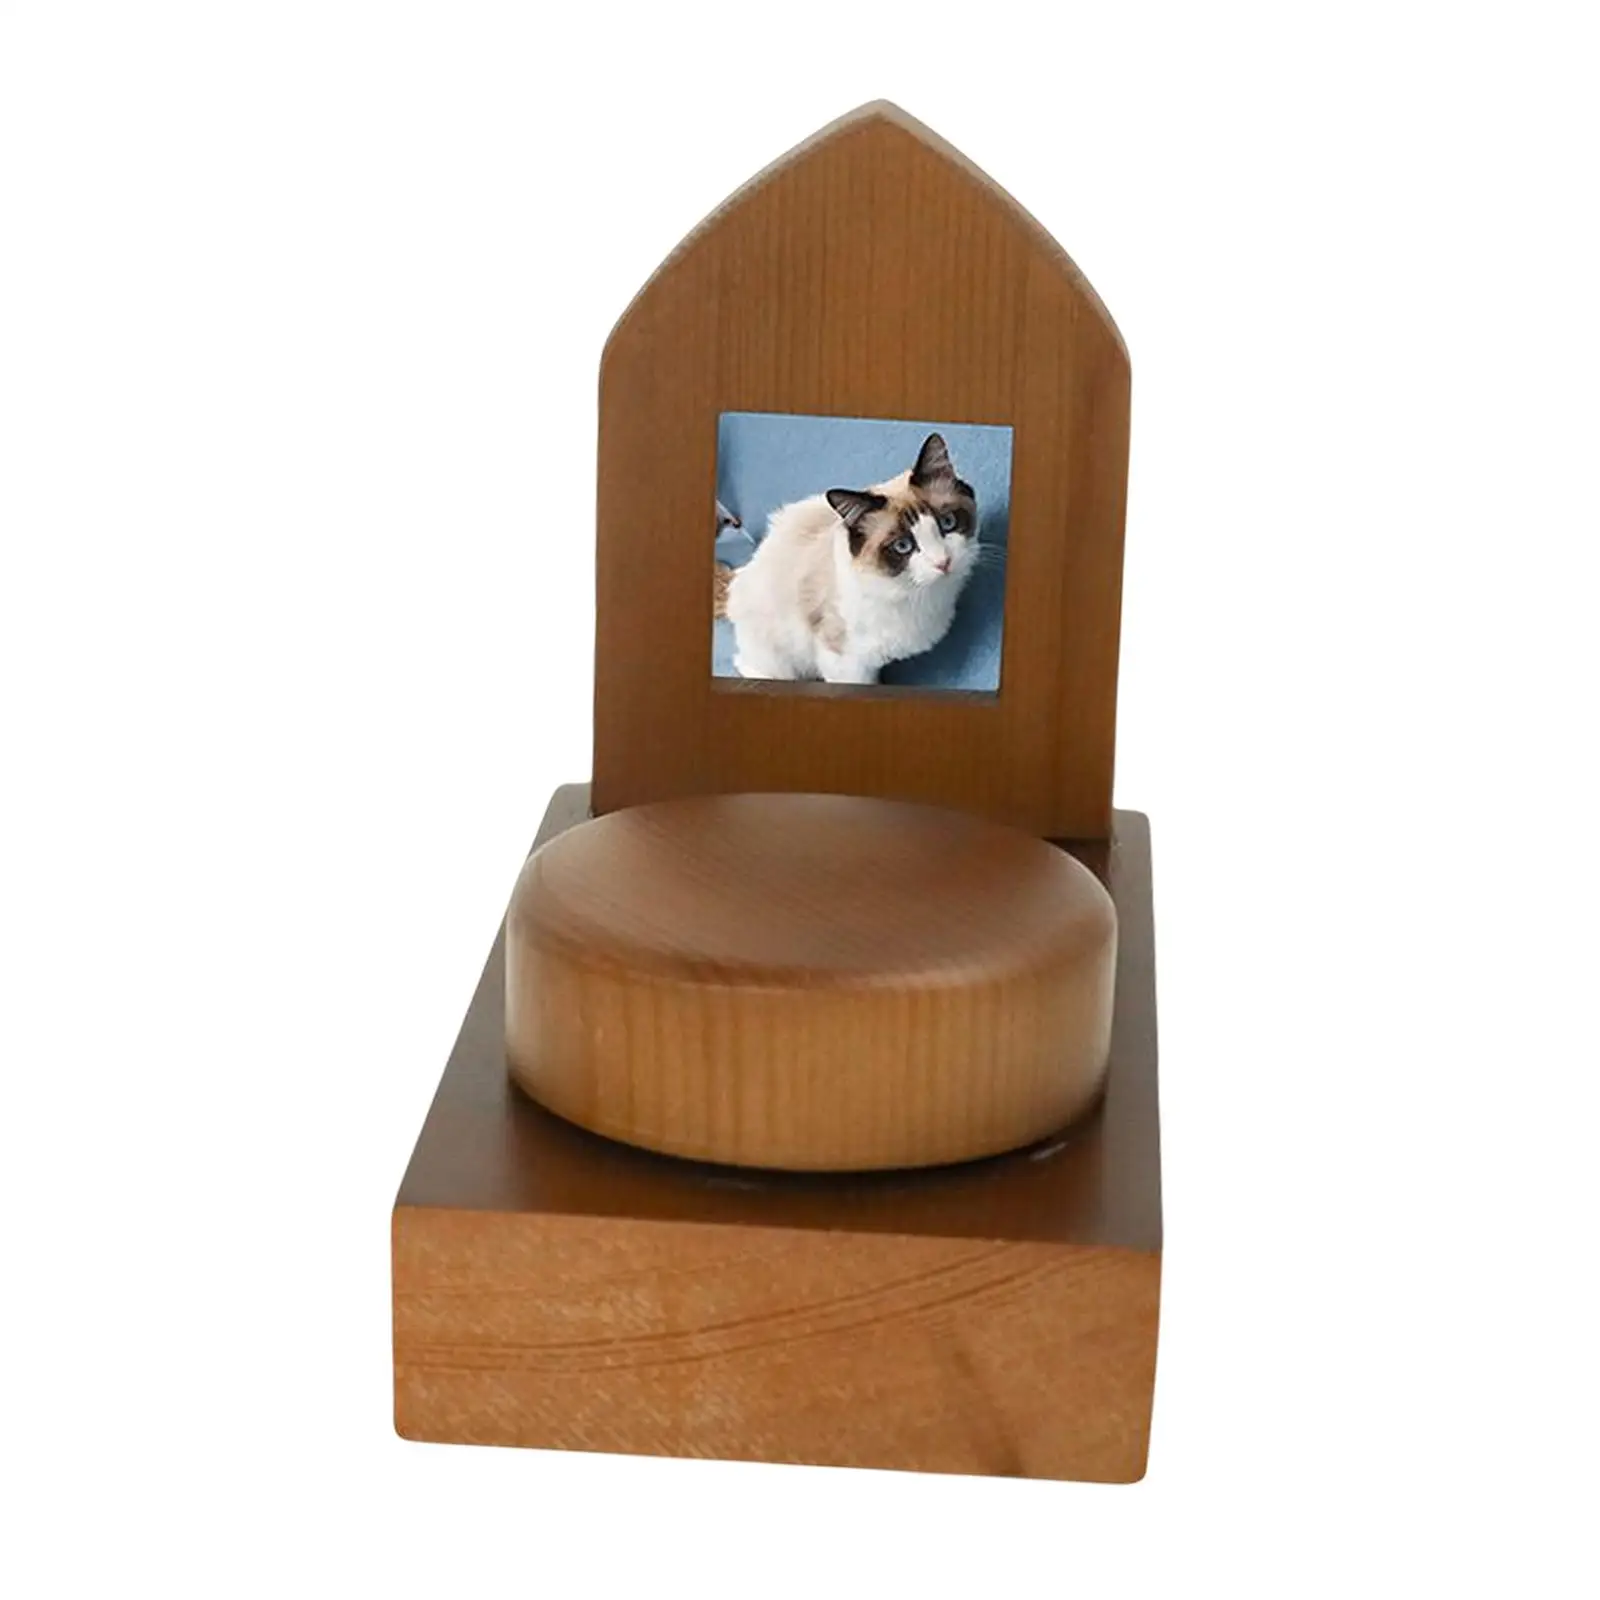 Pet Ashes Urns Wooden Animal Memorial Keepsake Lightweight Photo Frame